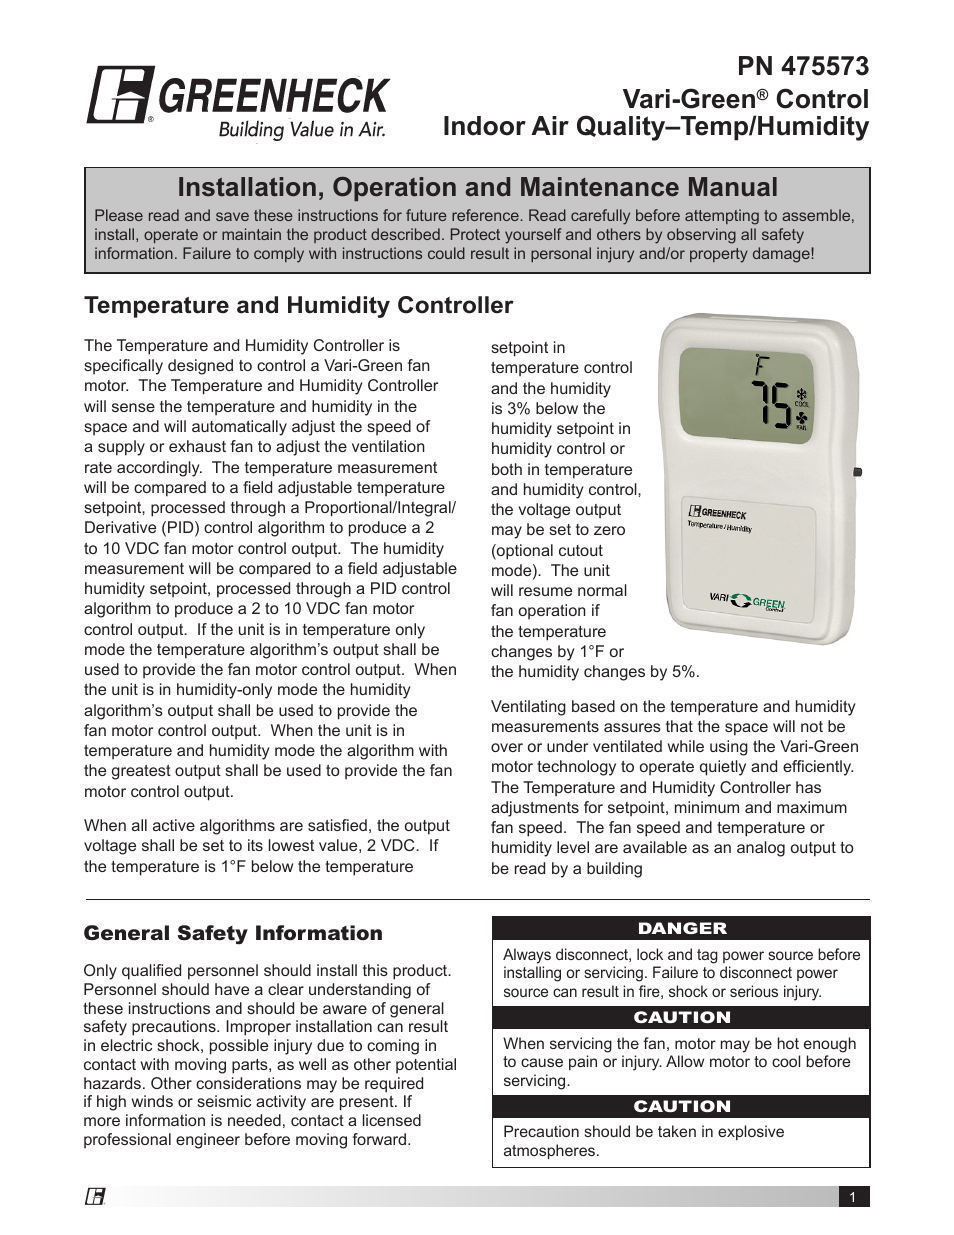 Vari-Green Control - Indoor Air Quality - Temp/Humidity (475573)